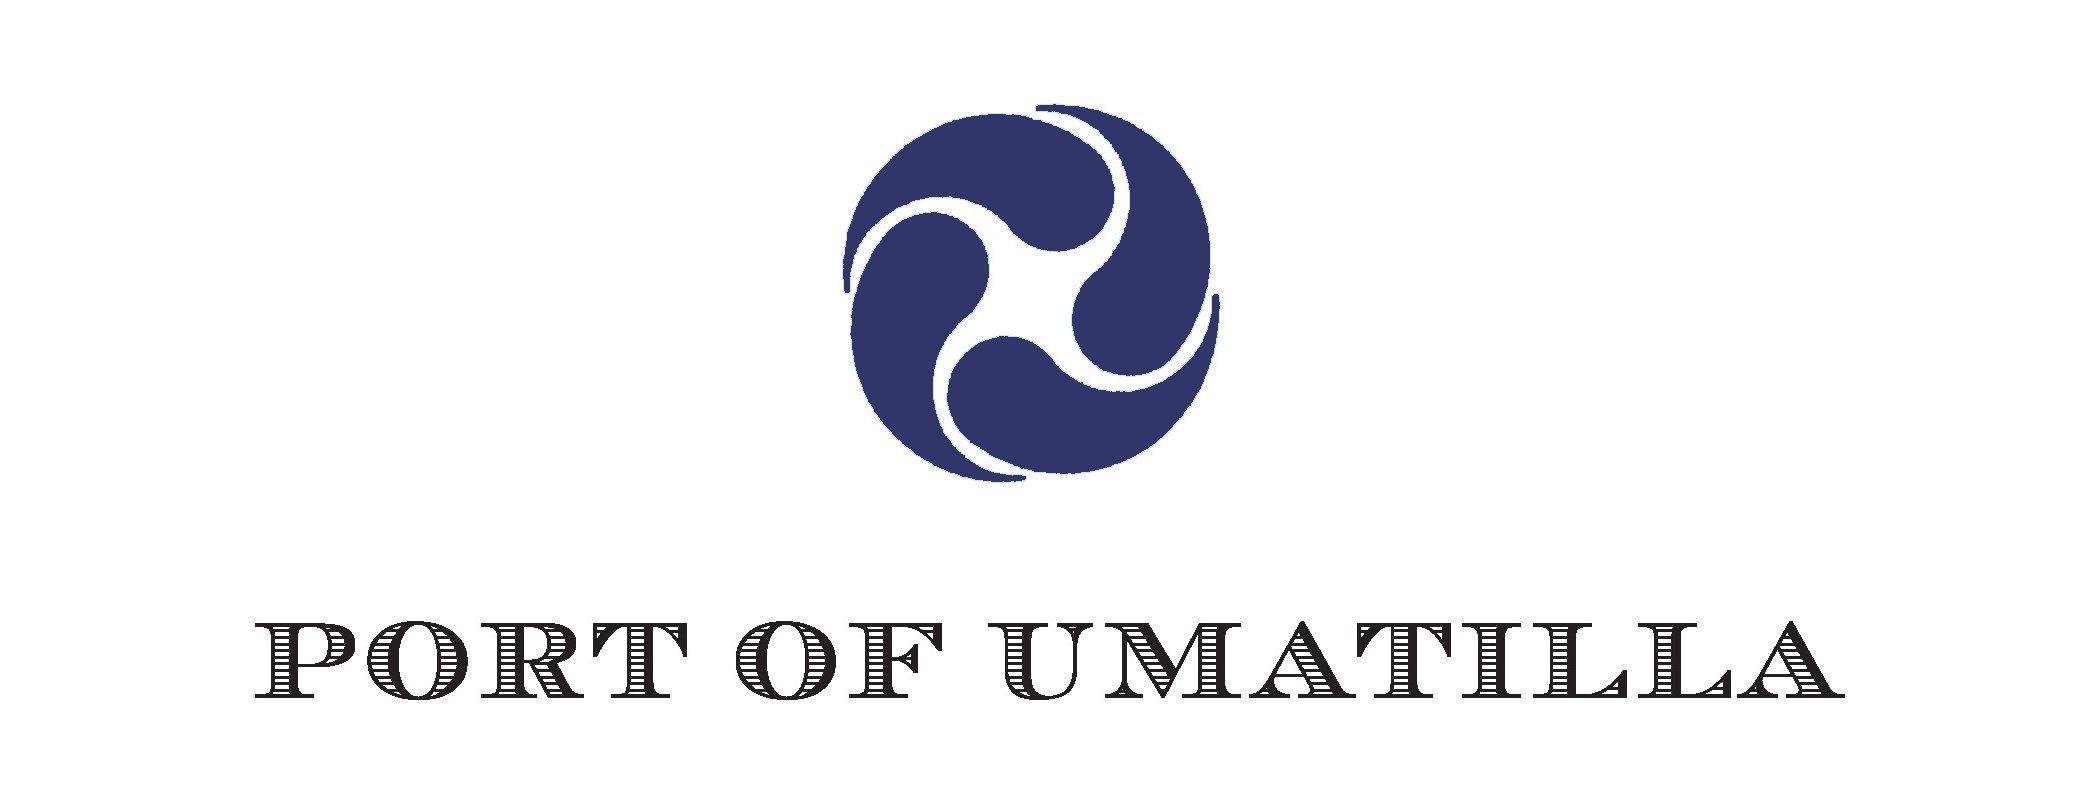 Umatilla Logo - Industrial Properties, Economic Development of Umatilla